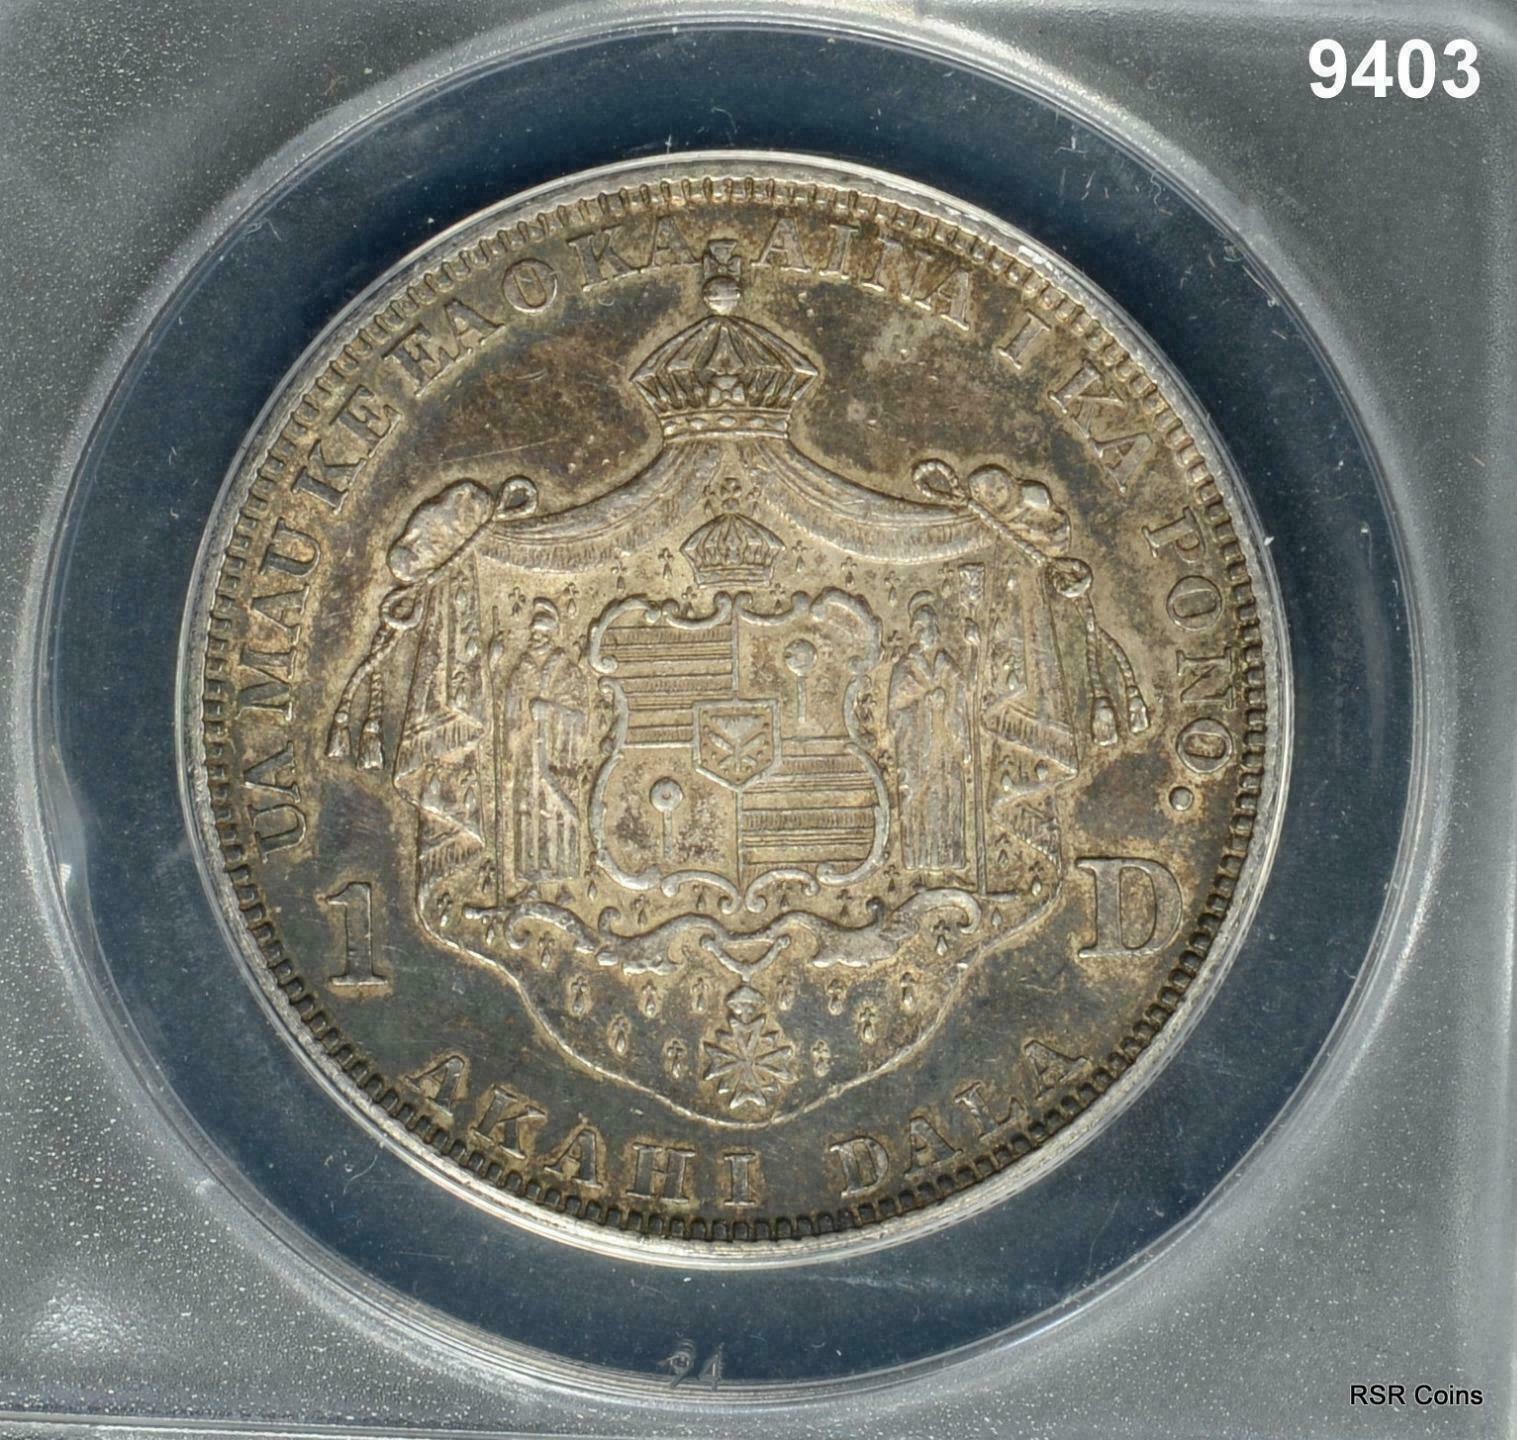 1883 HAWAII $1 SILVER DOLLAR ANACS CERTIFIED AU50 #9403